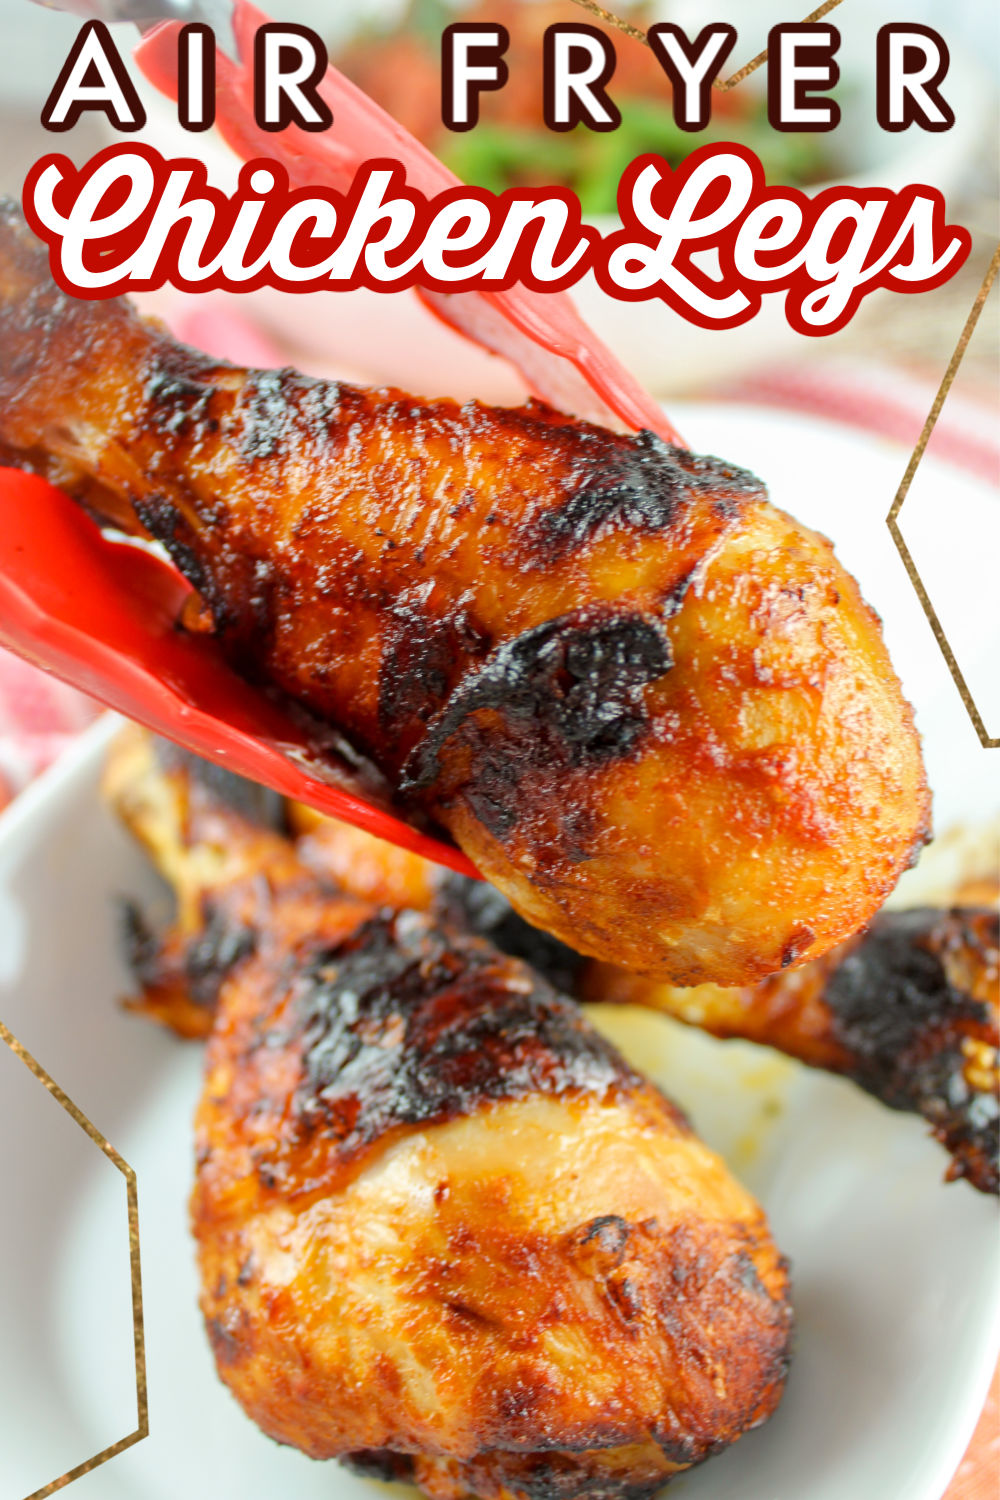 Air Fryer Chicken Legs - The Food Hussy